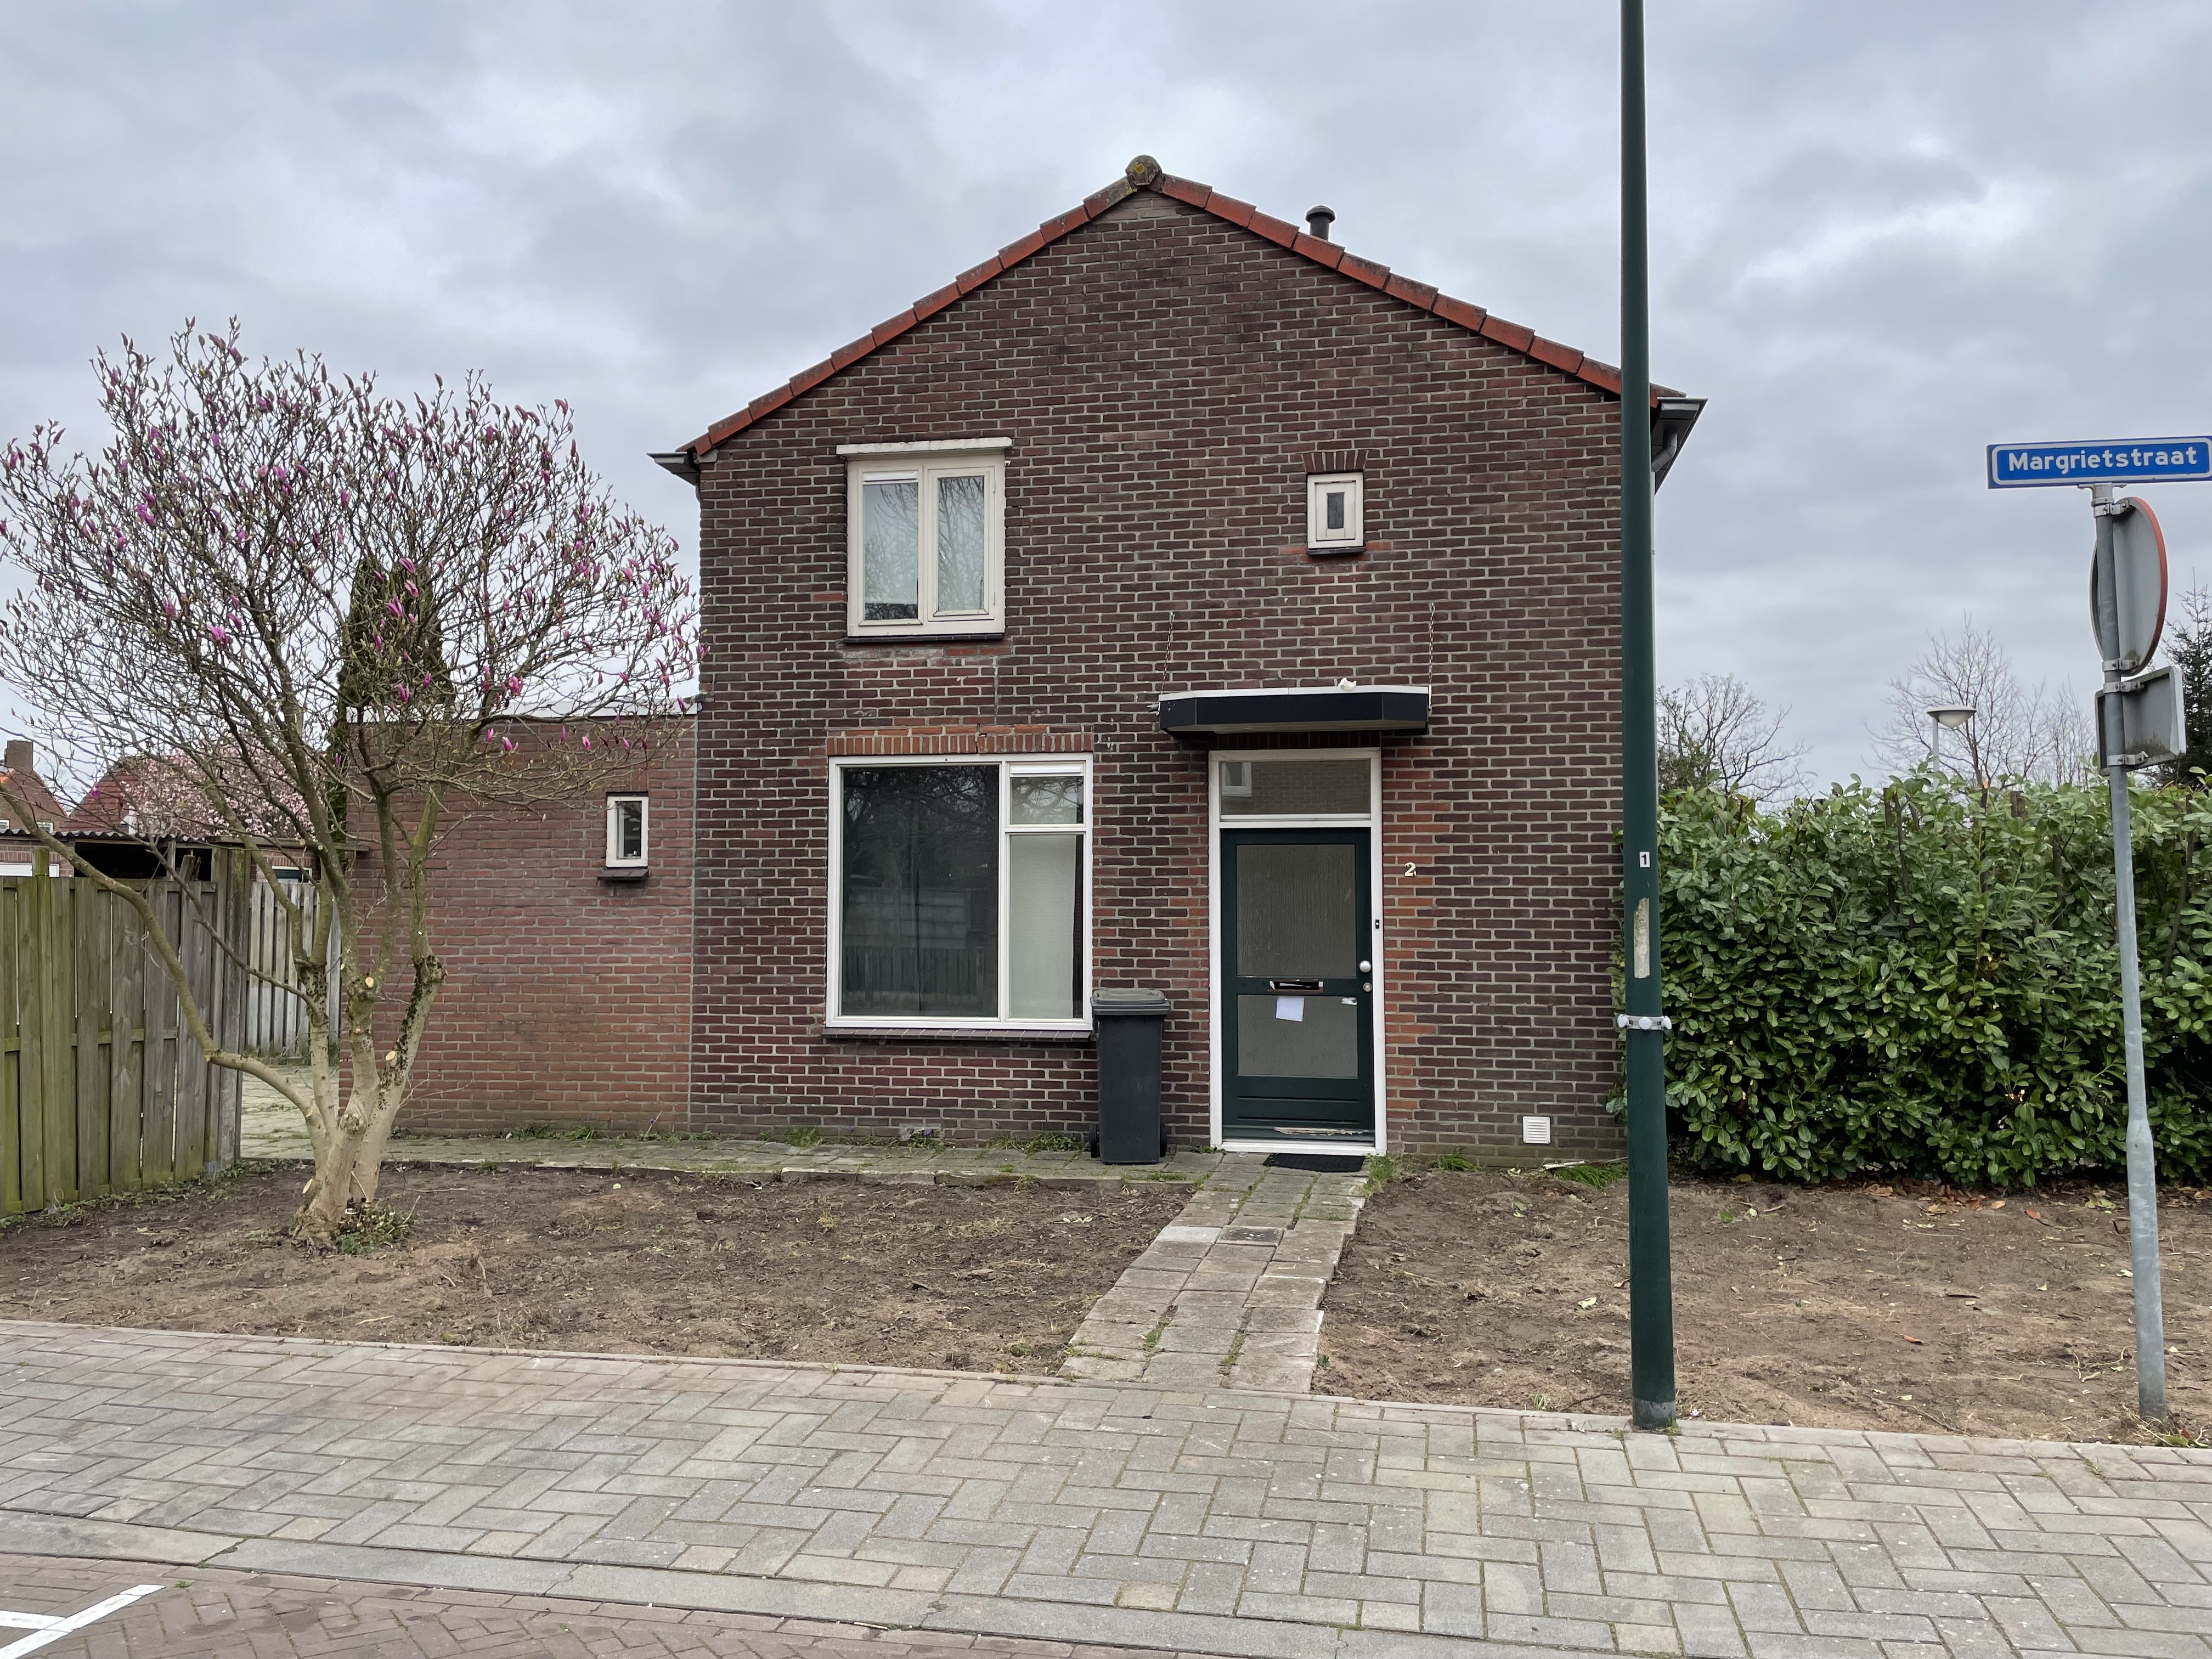 Margrietstraat 2, 5671 HR Nuenen, Nederland